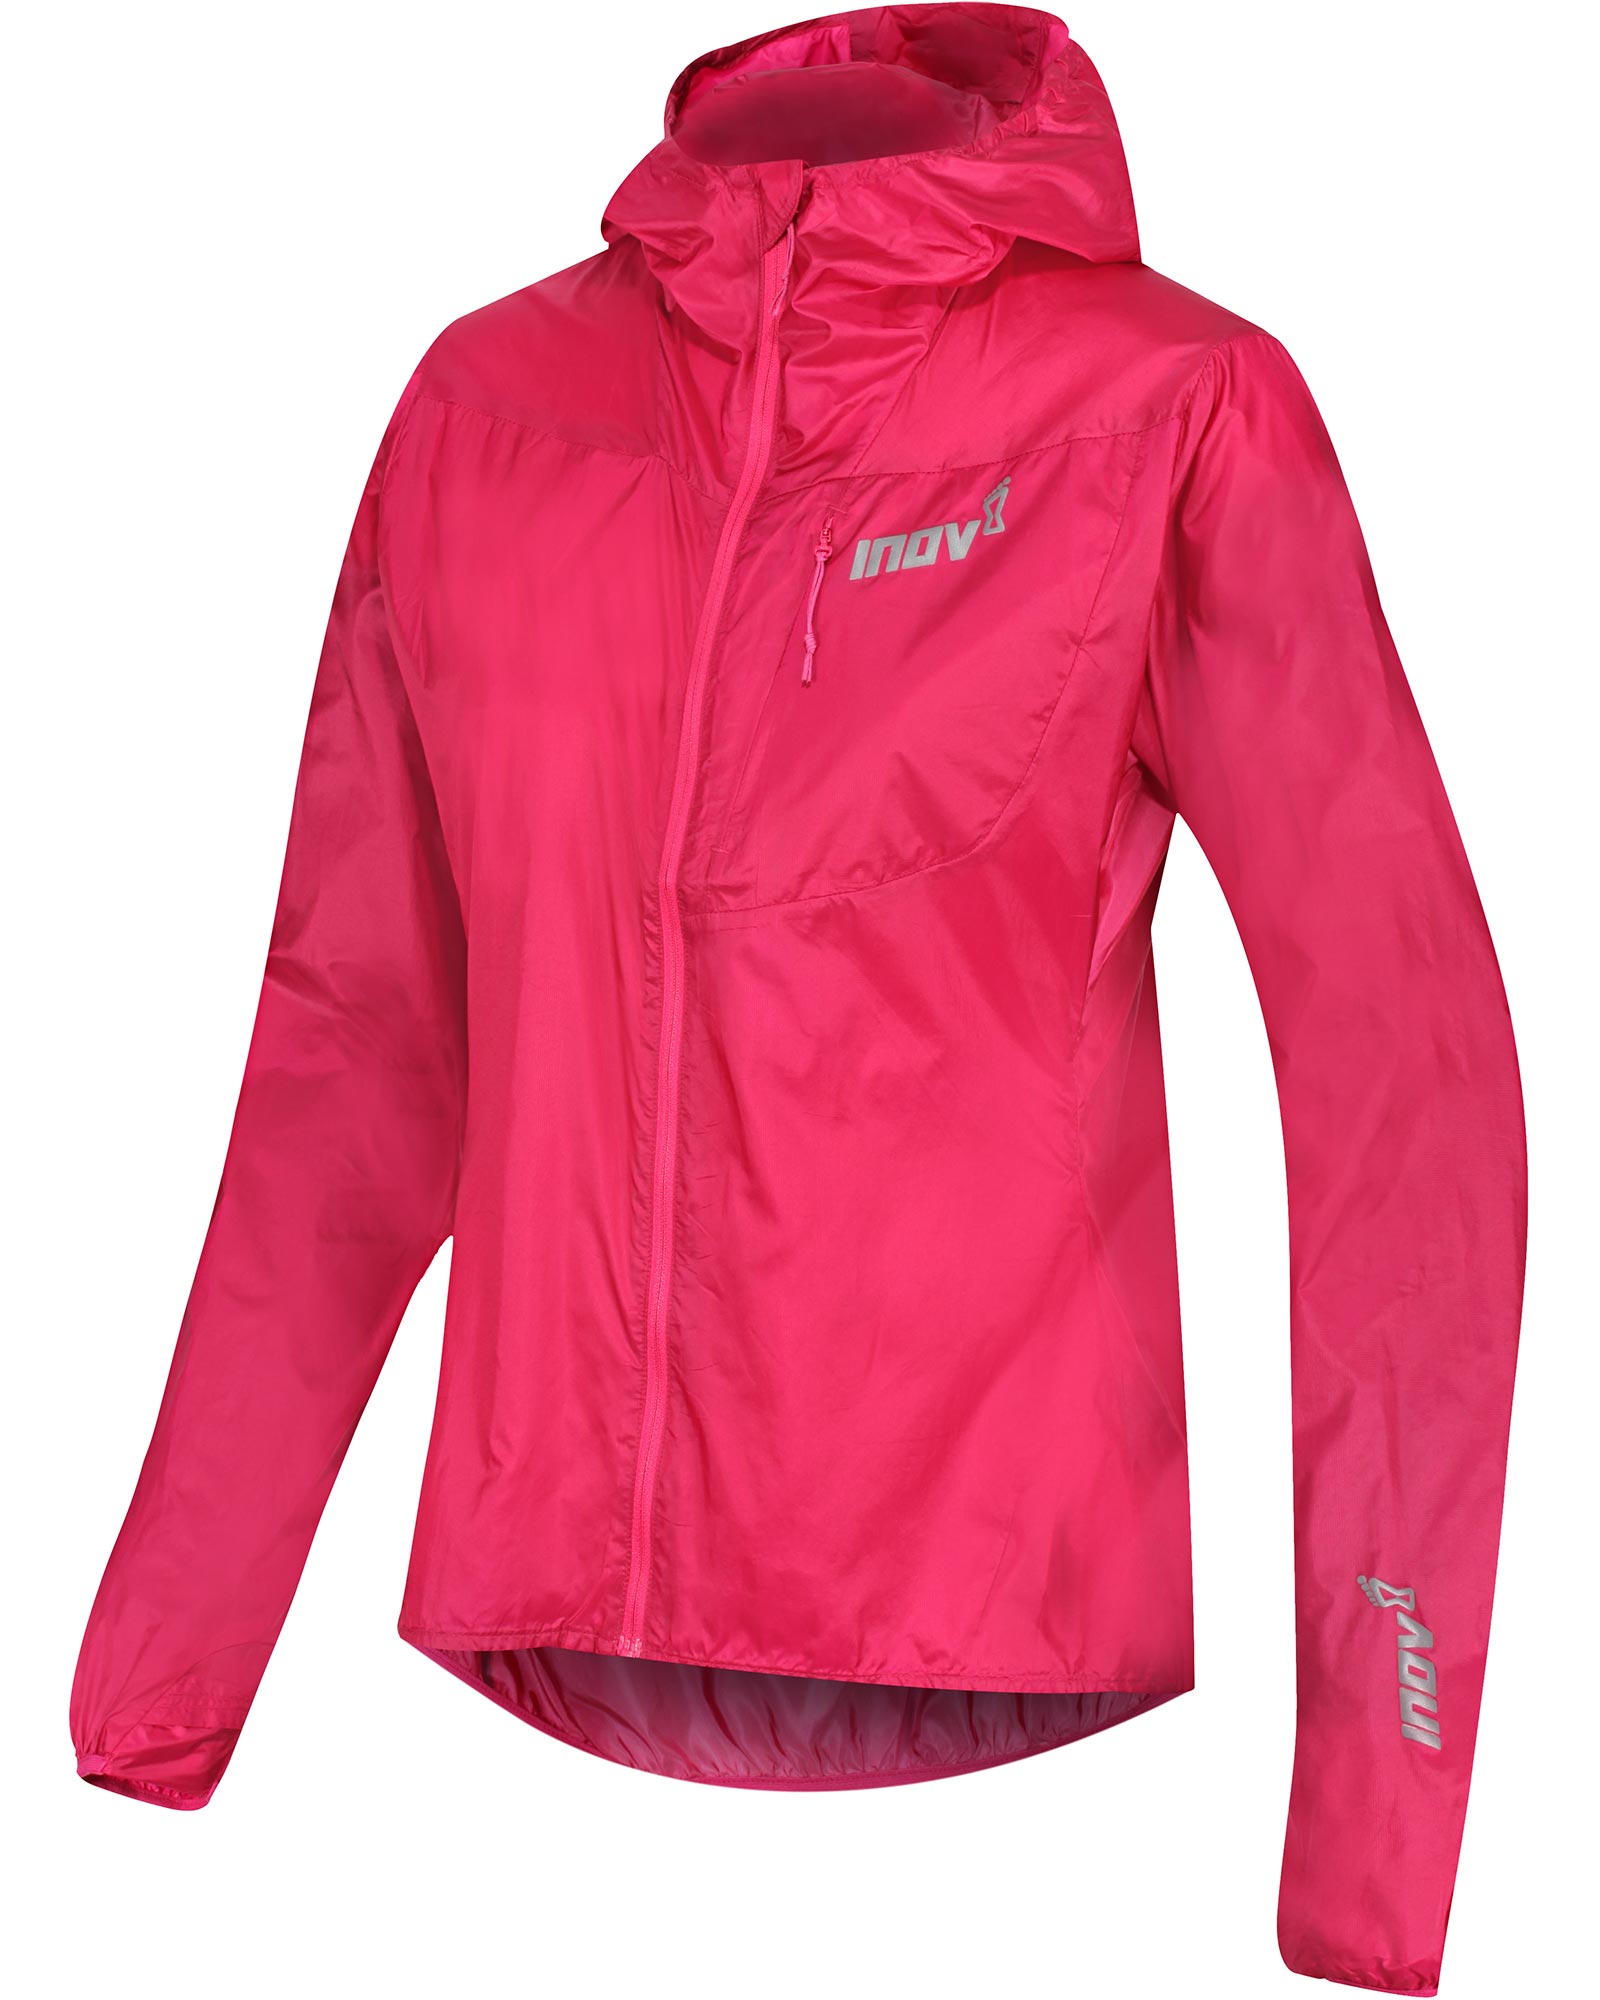 Inov 8 Full Zip Windshell Women’s Jacket - Pink 12